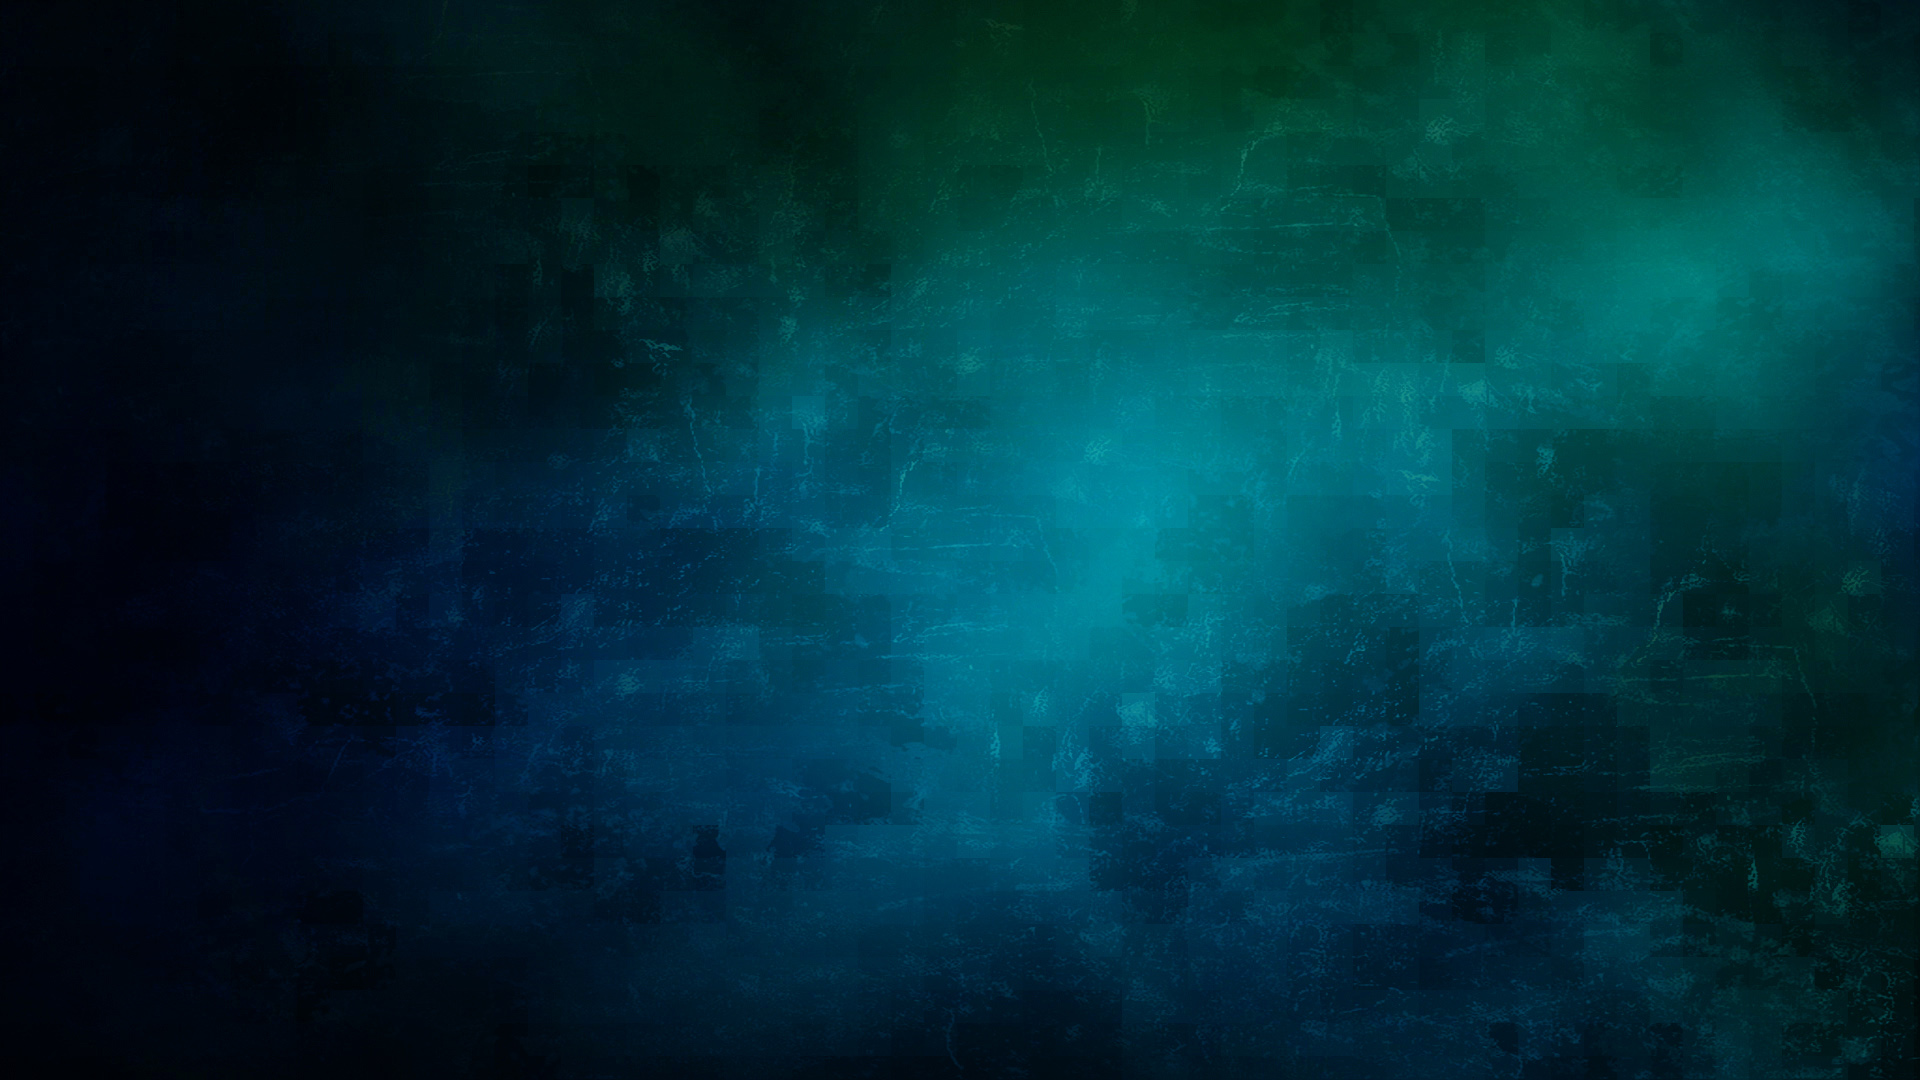 ubuntu gnome wallpaper,blue,black,nature,green,atmosphere